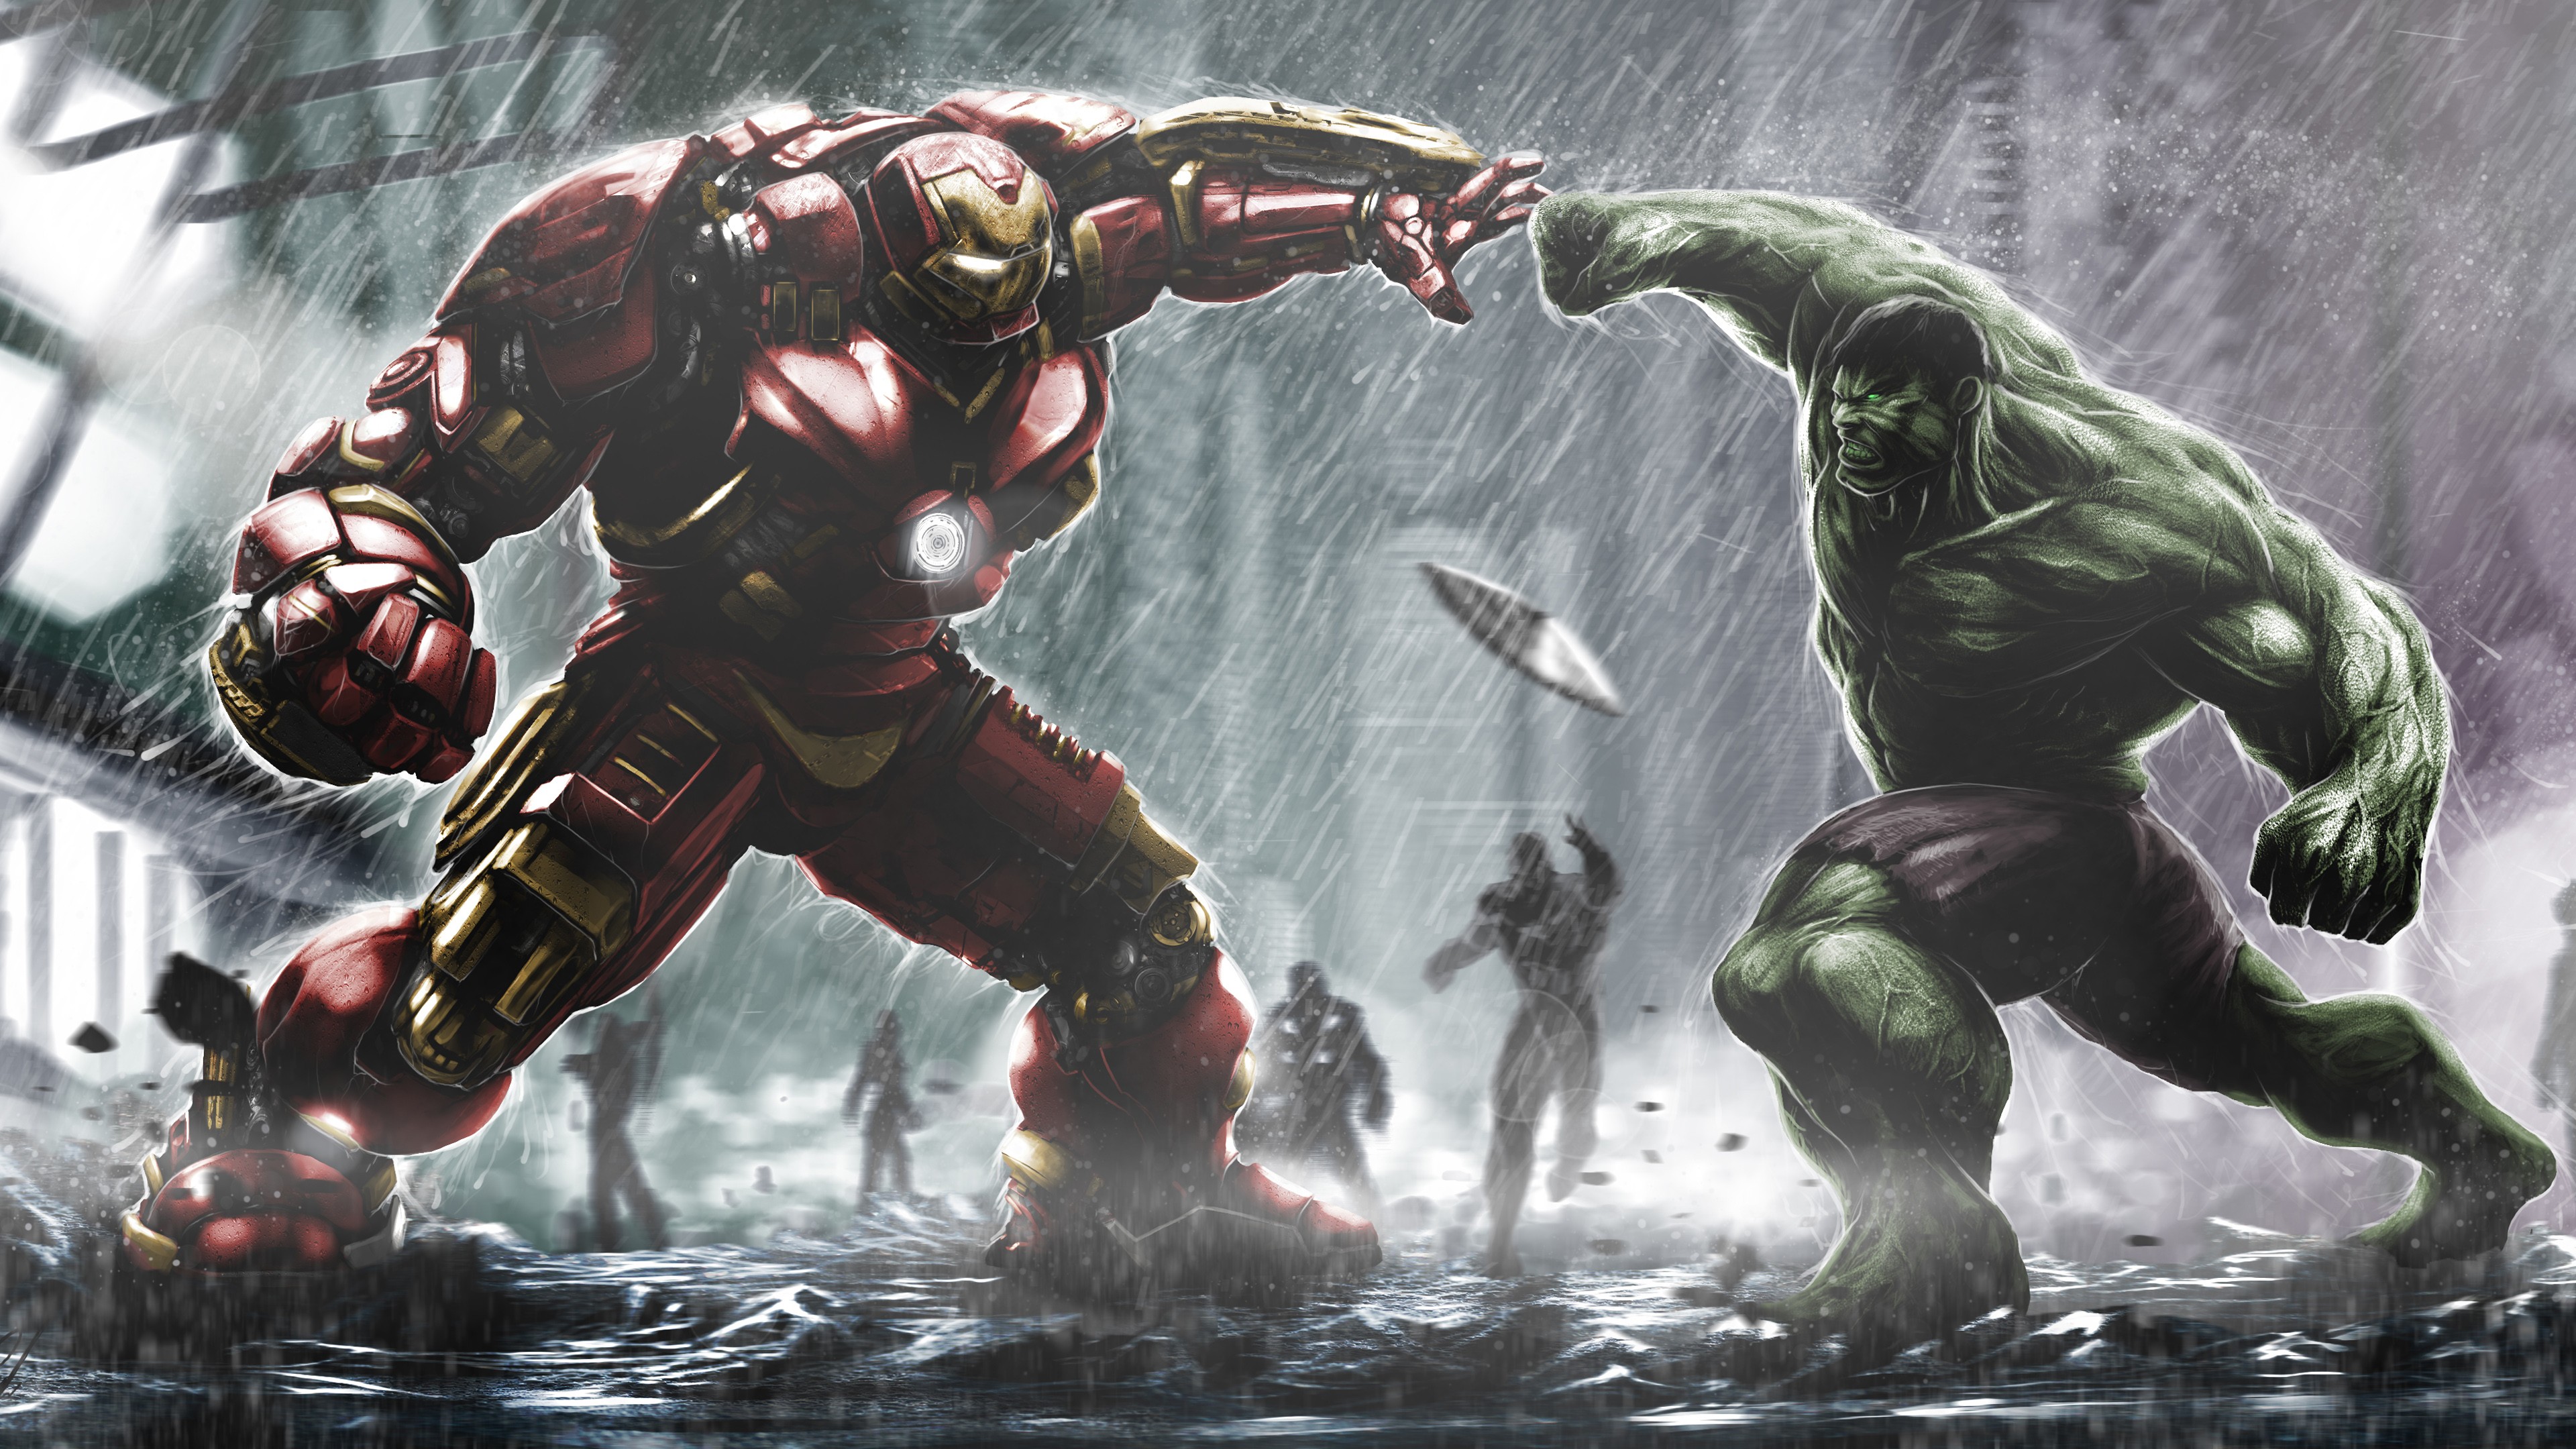 #Hulk, #Hulkbuster, #Marvel Comics wallpaper. General